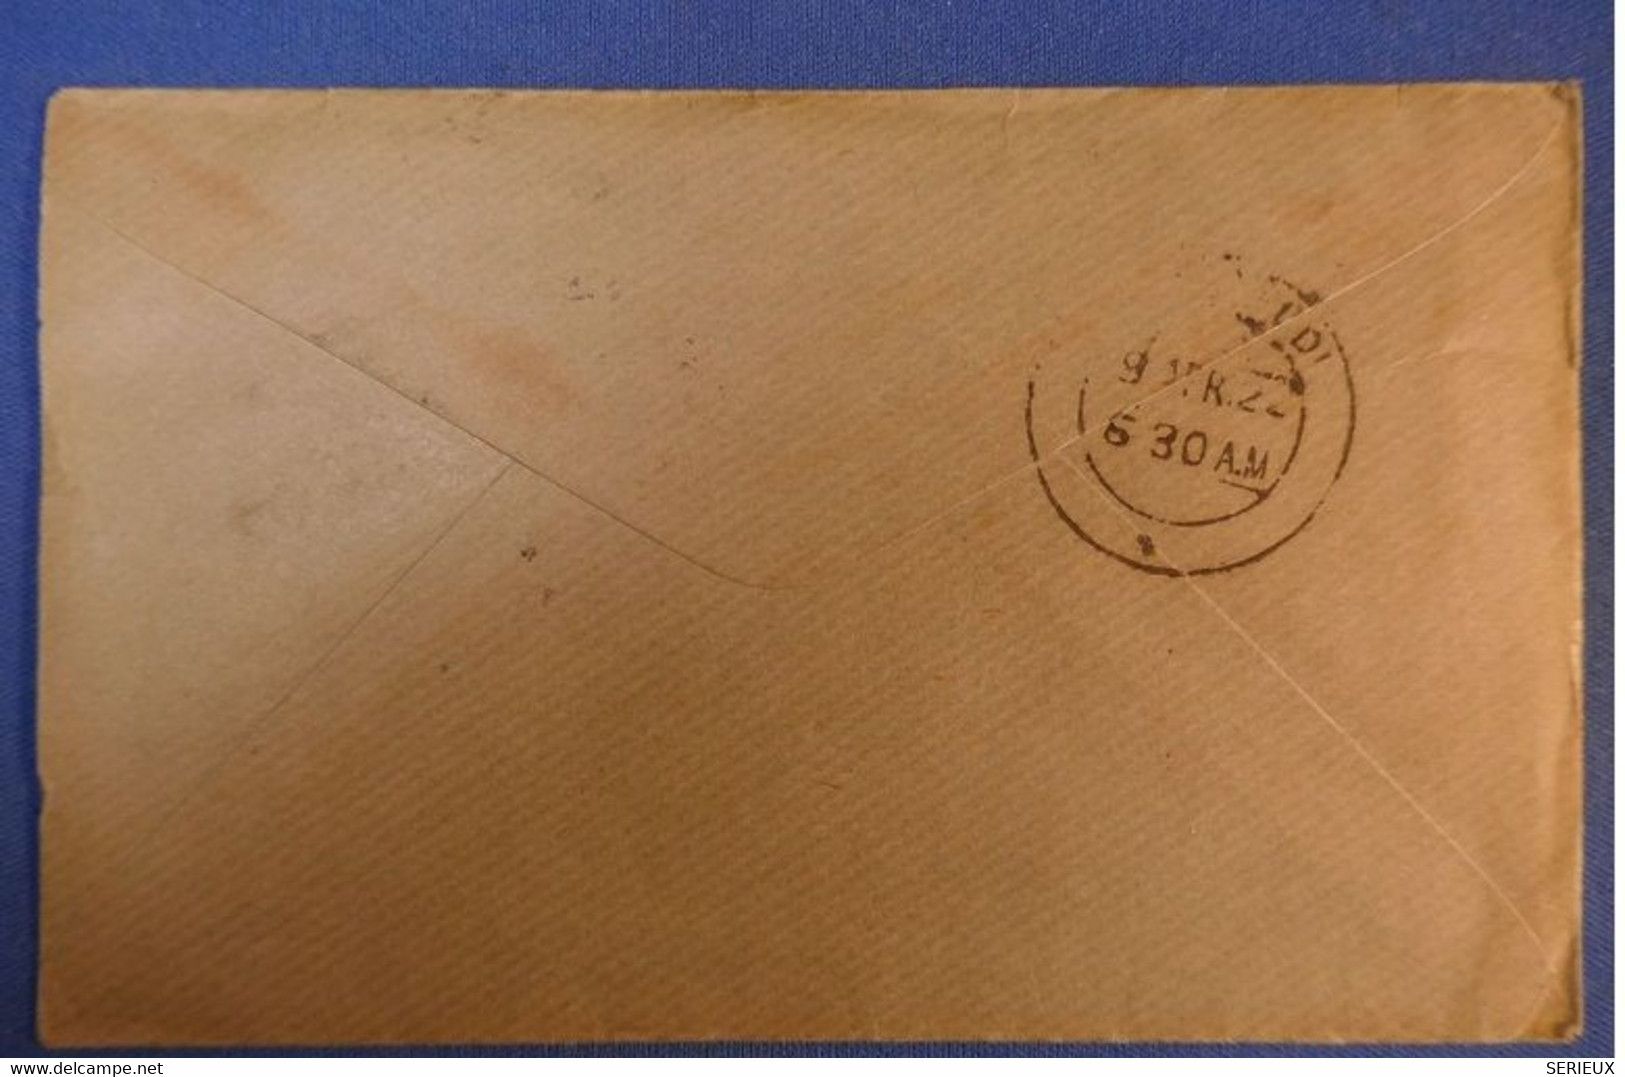 512 MALAISIE LETTRE MALAYA 1922 KUALA LUMPUR POUR L INDE + CACHETS A VOIR - Malayan Postal Union